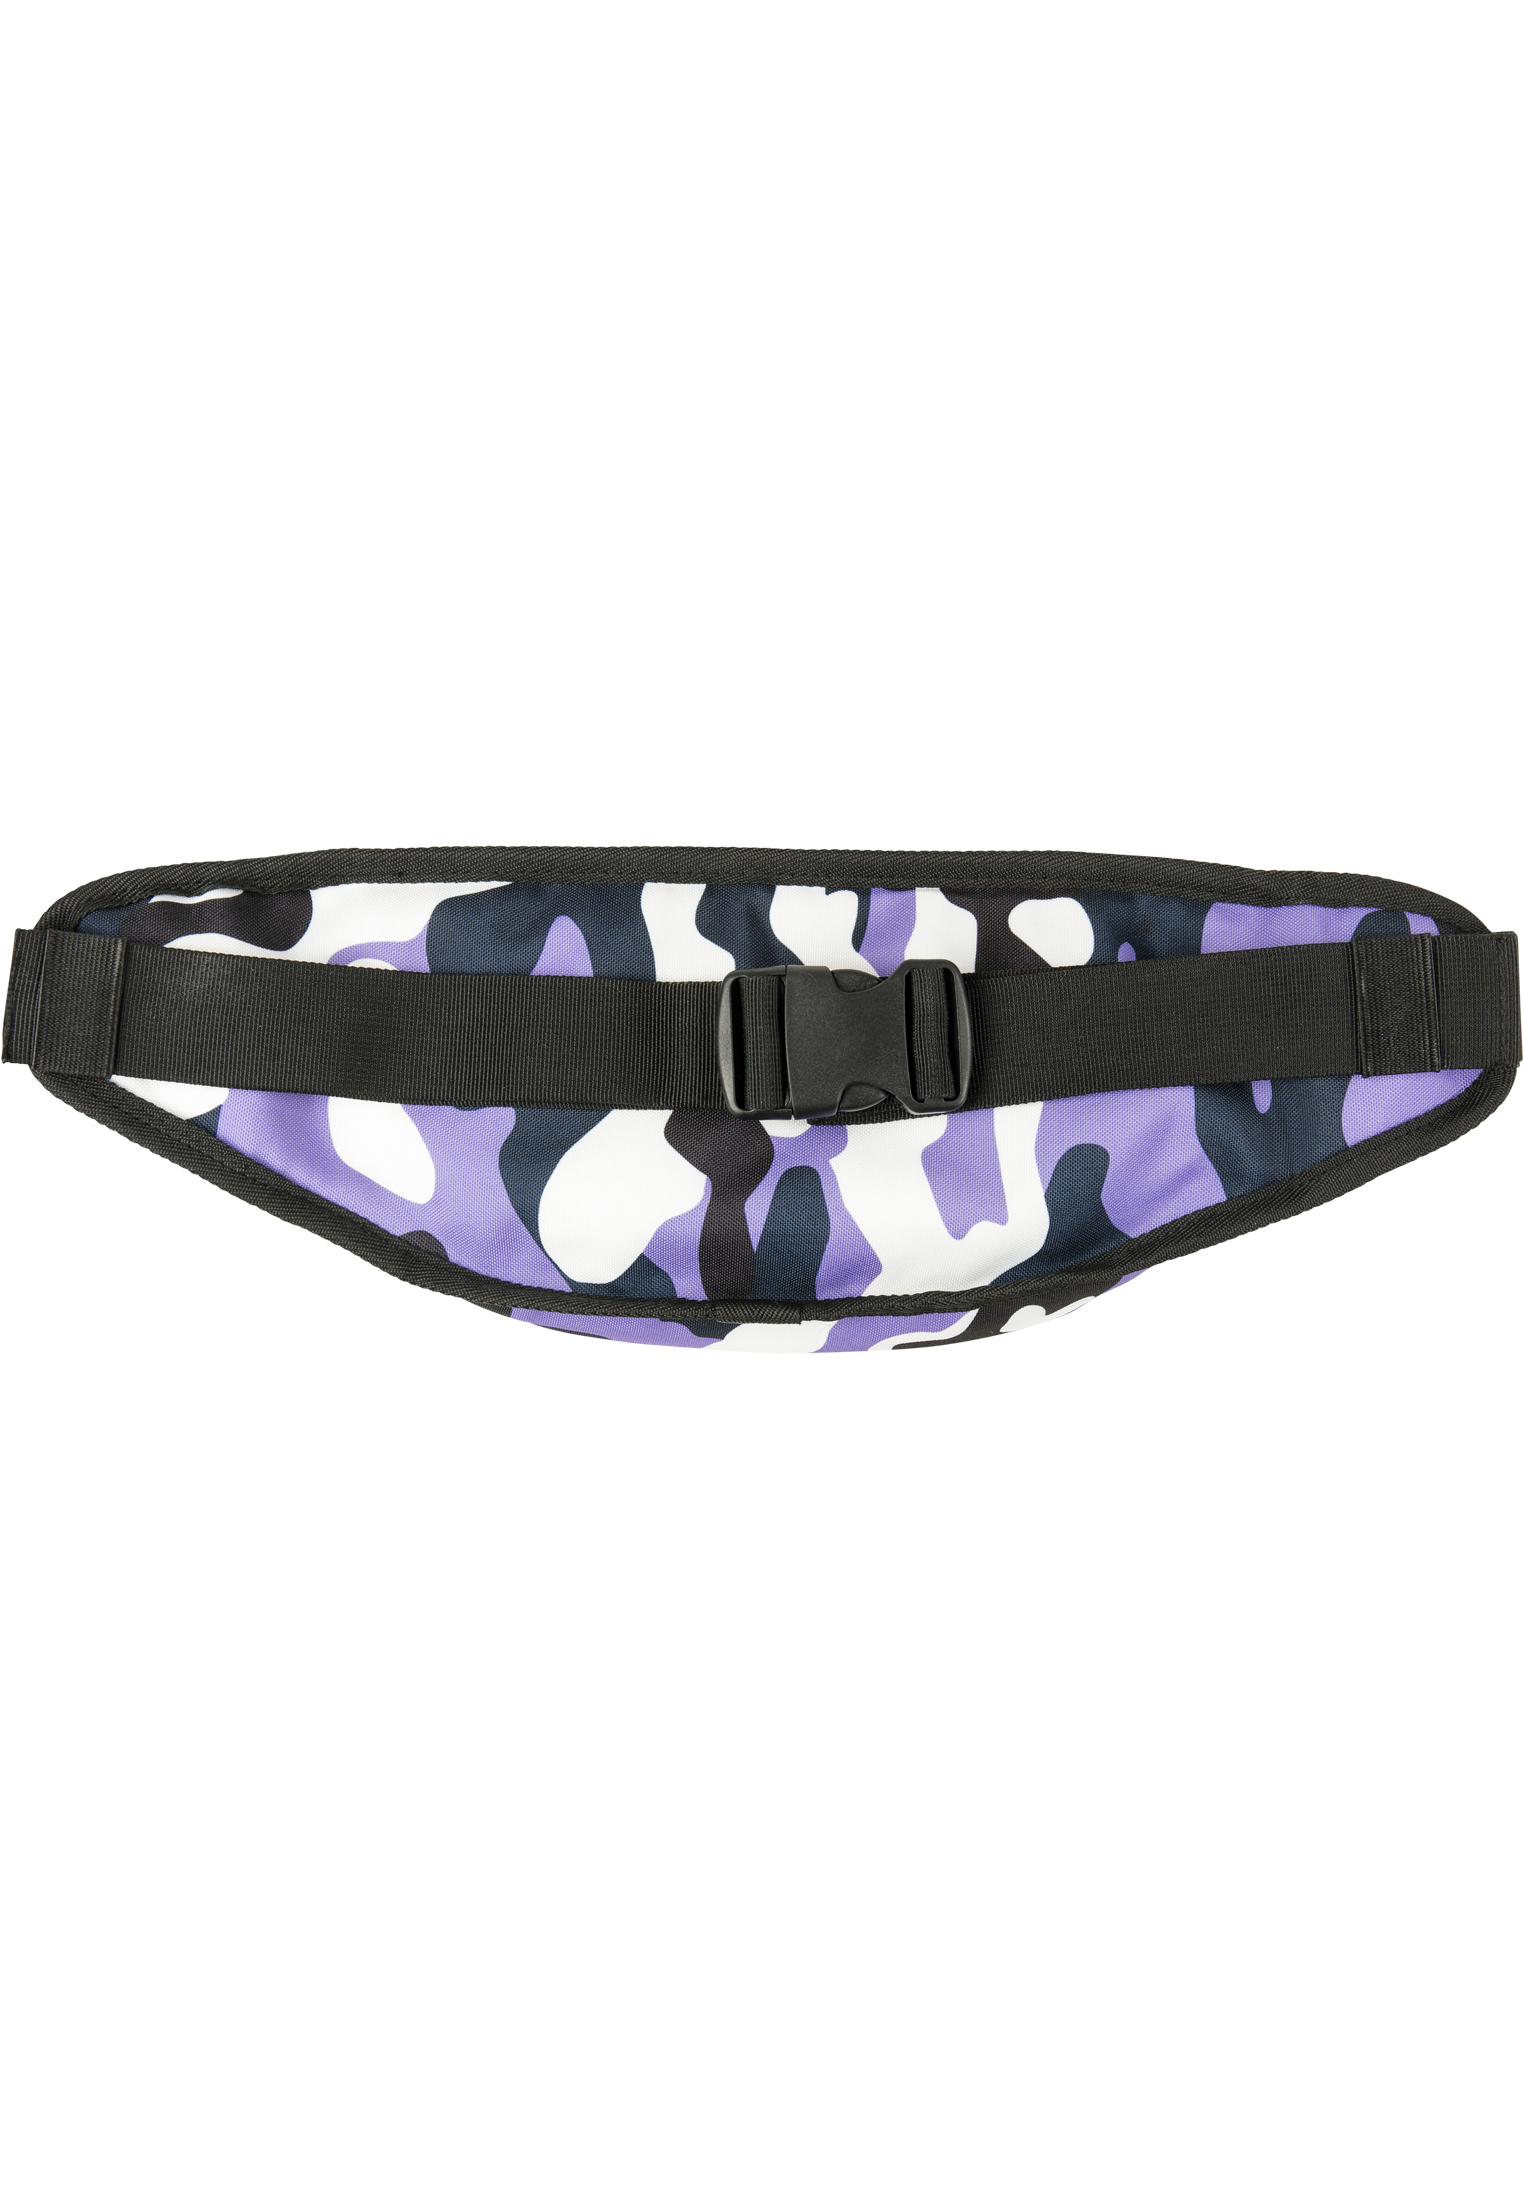 Taschen Camo Shoulder Bag in Farbe ultraviolet camo